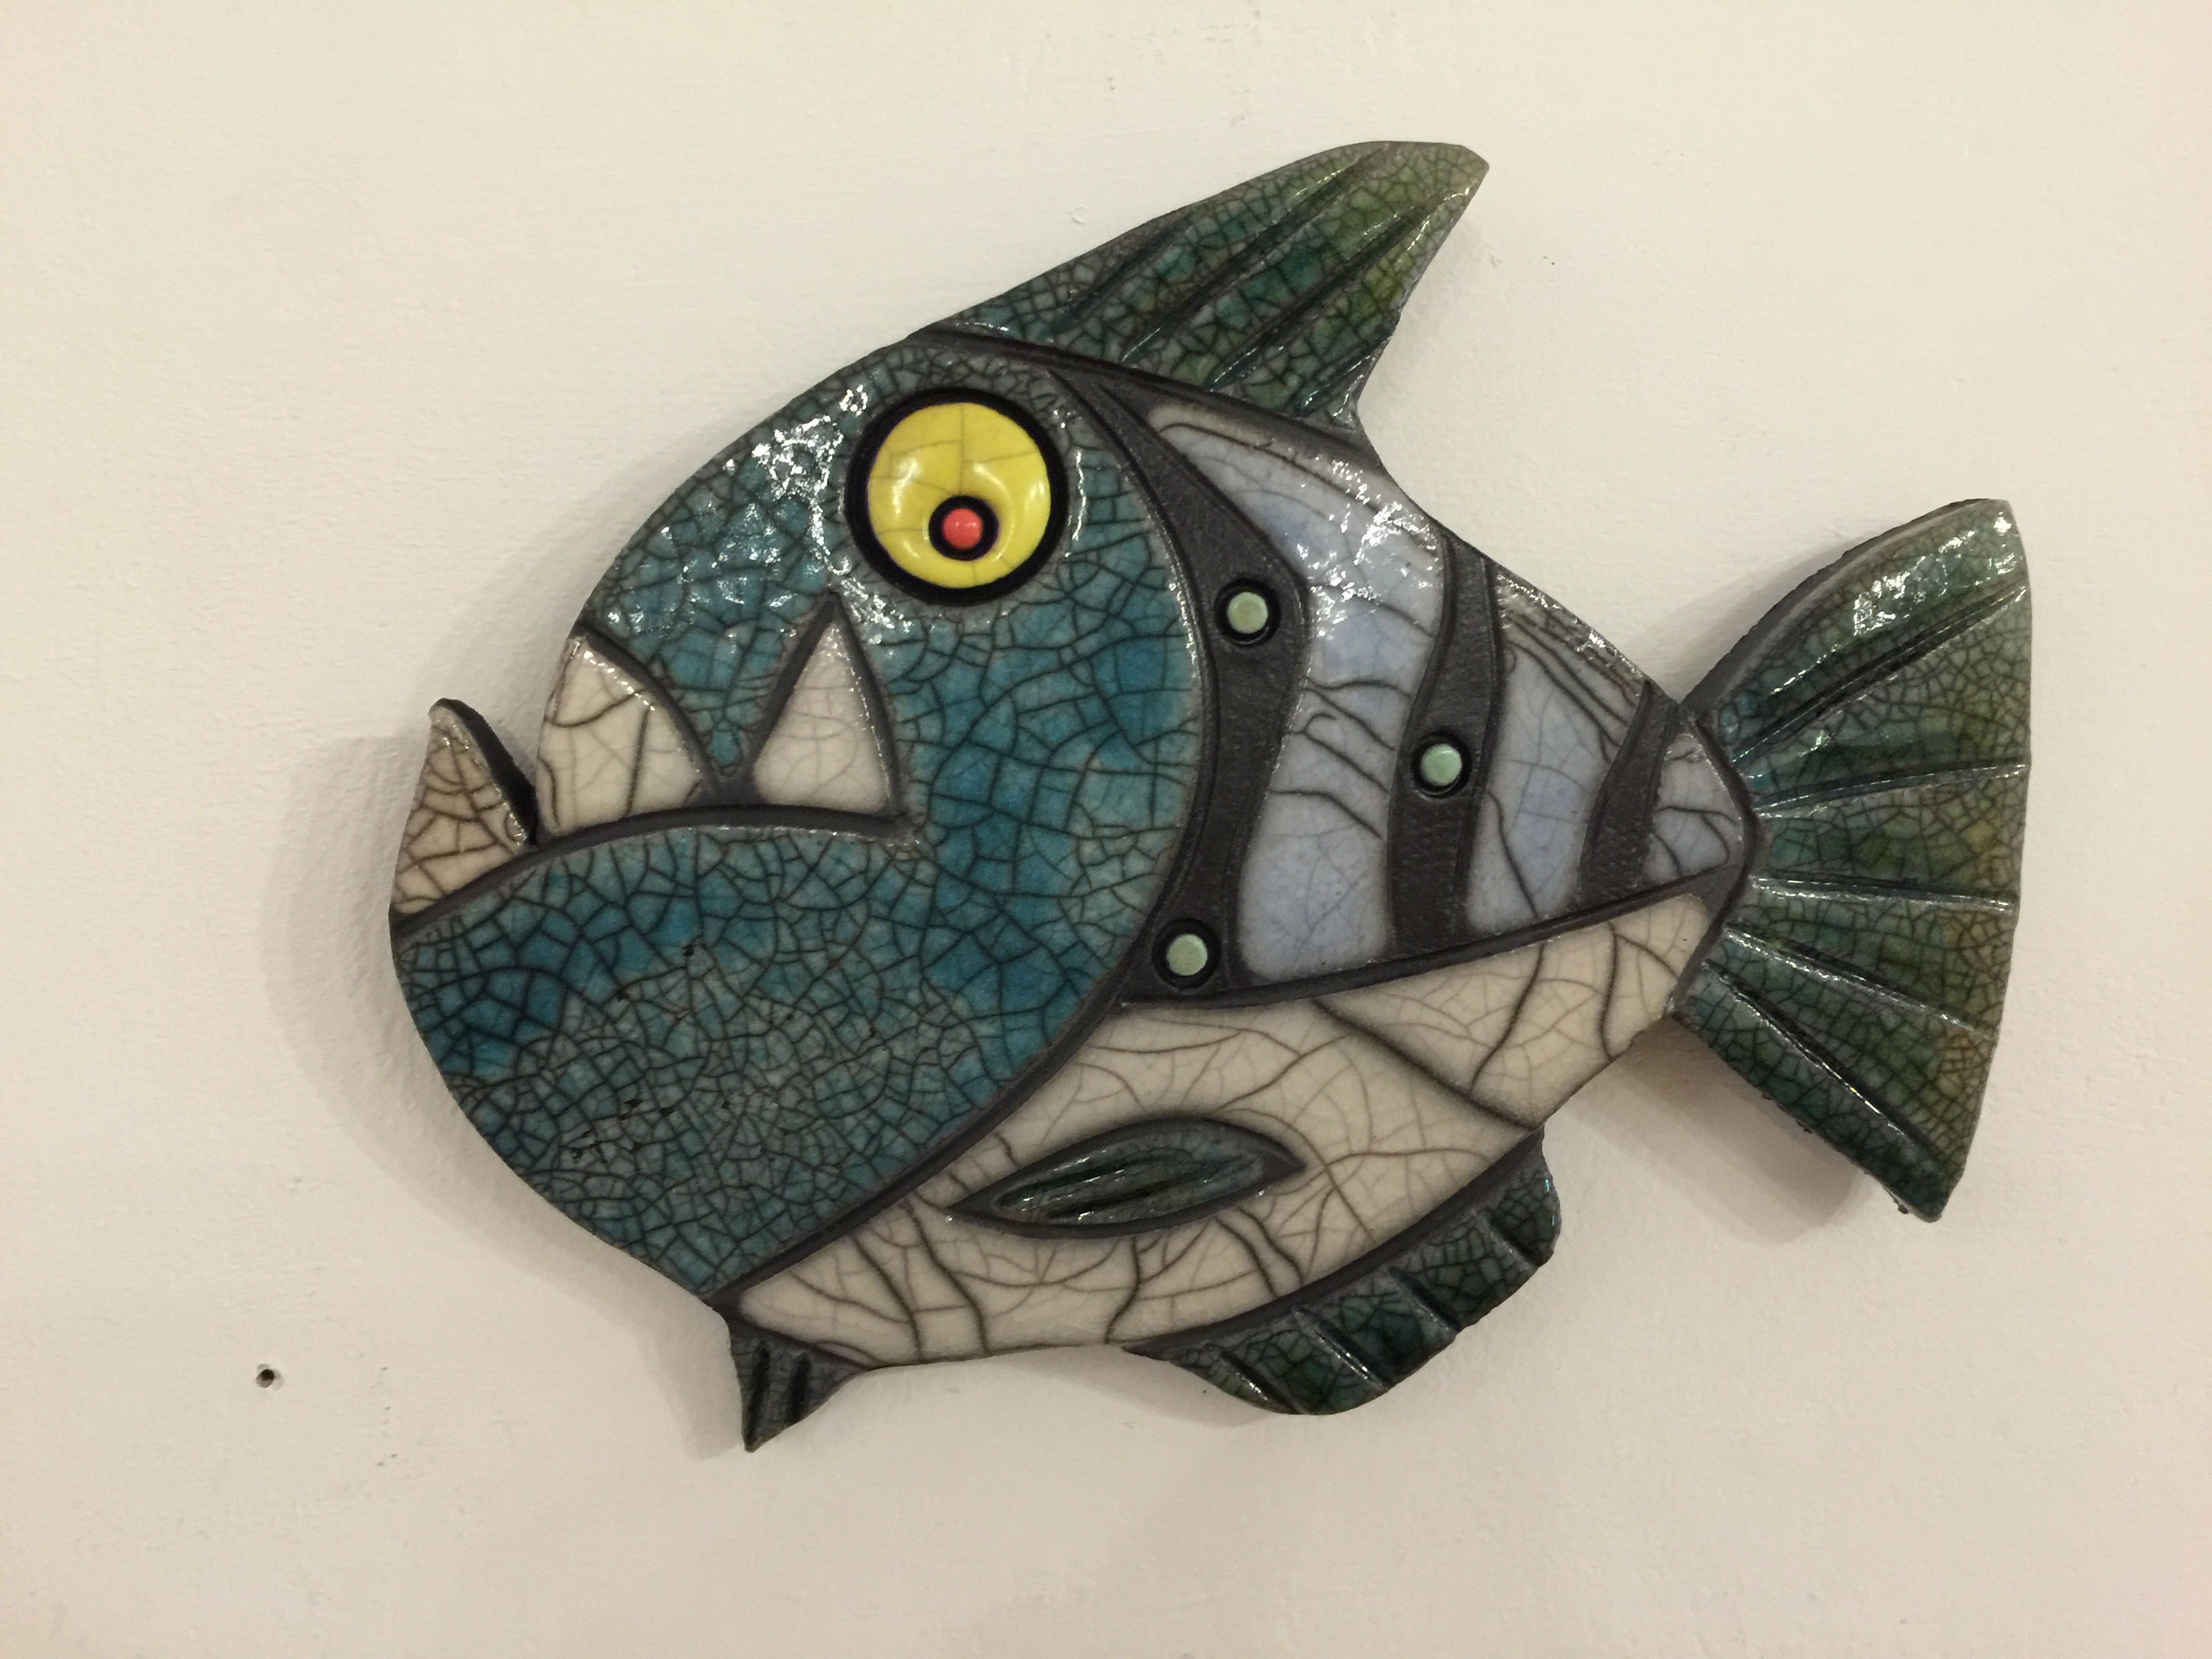 'Dennis the Menace Fish II' by artist Julian Smith